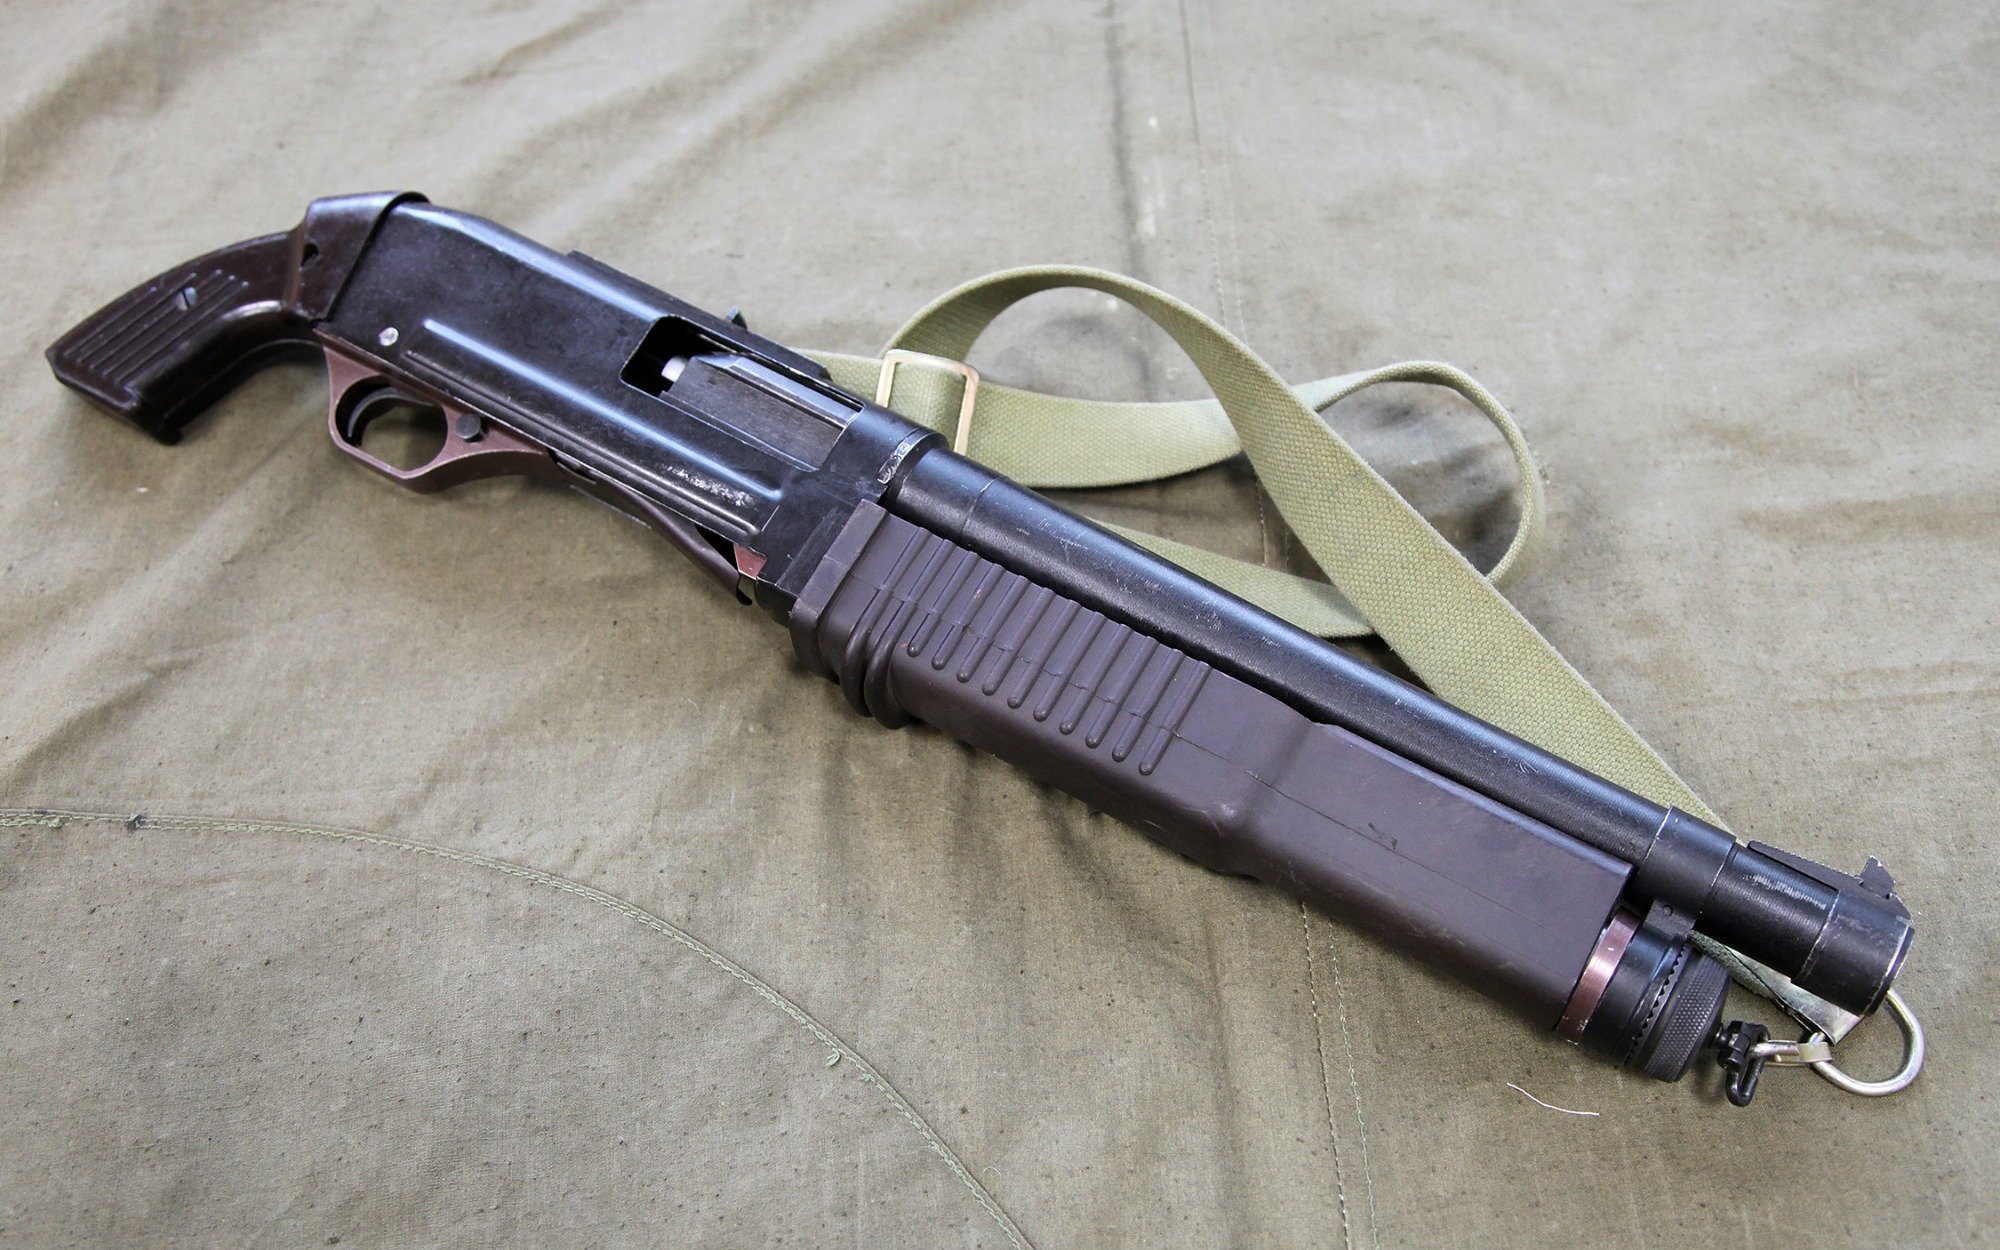 Ks 23 This Massive Soviet Shotgun Is Banned In The U S The National Interest